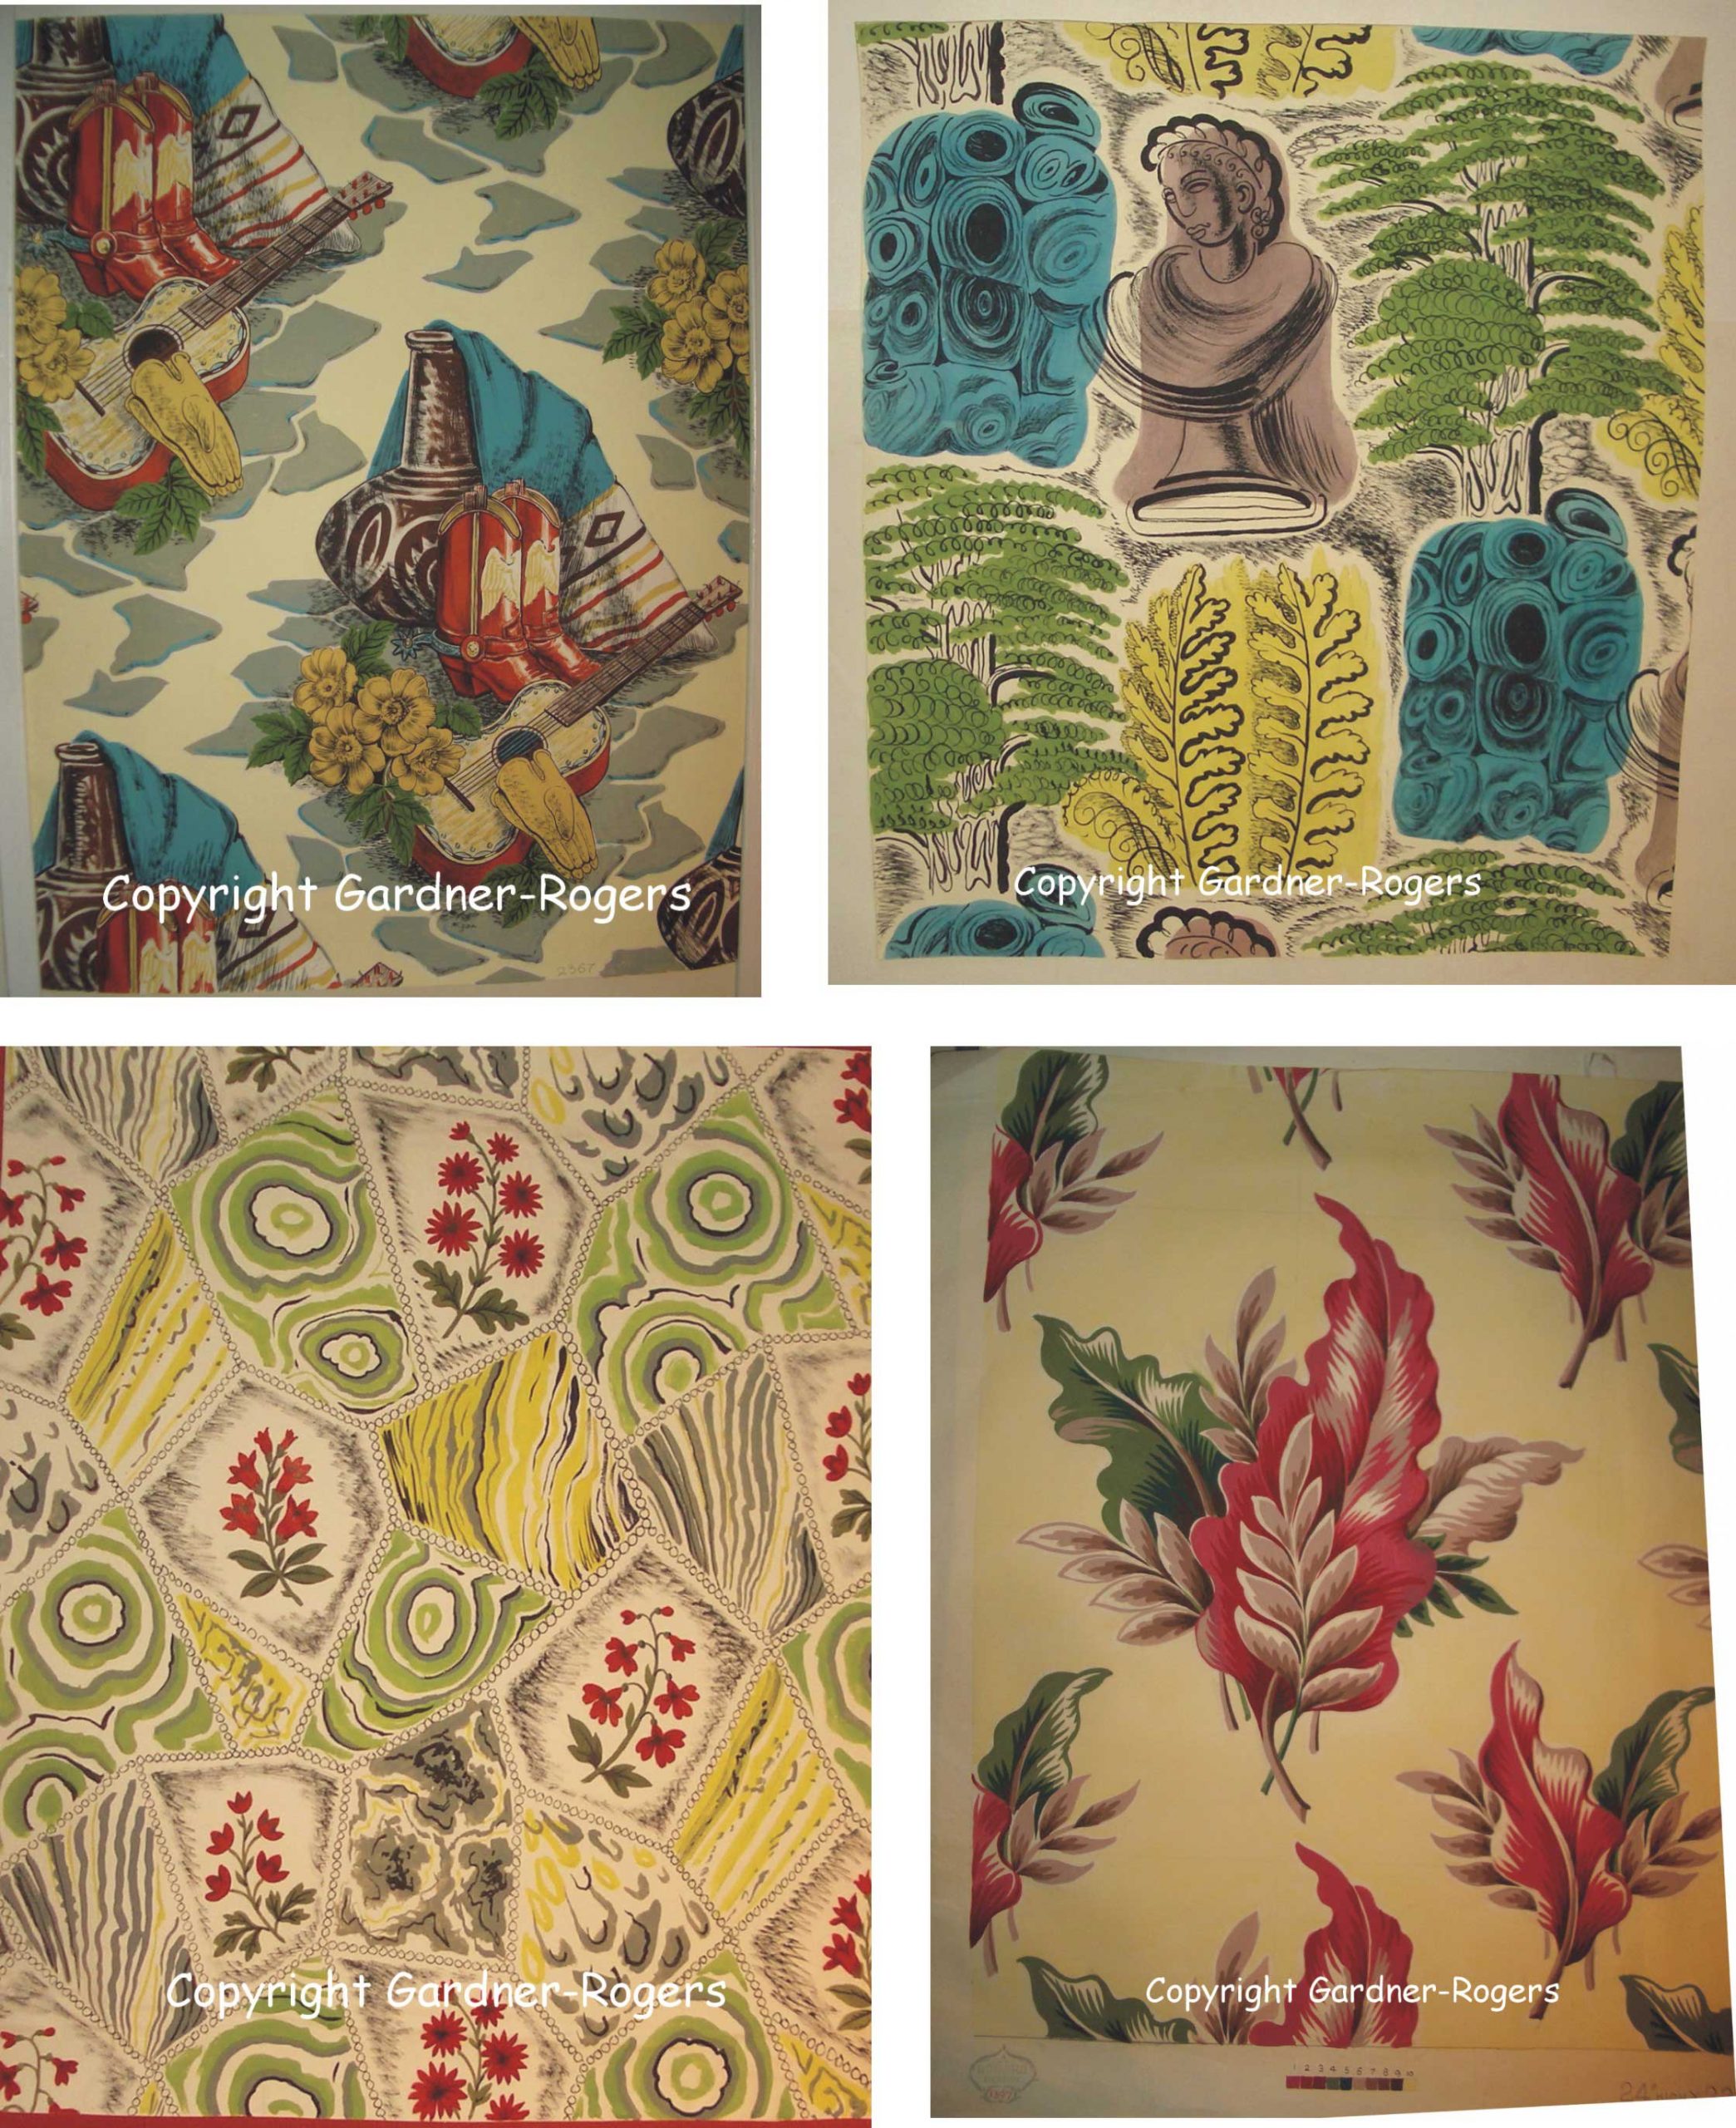 Textile designs by Ken Rogers